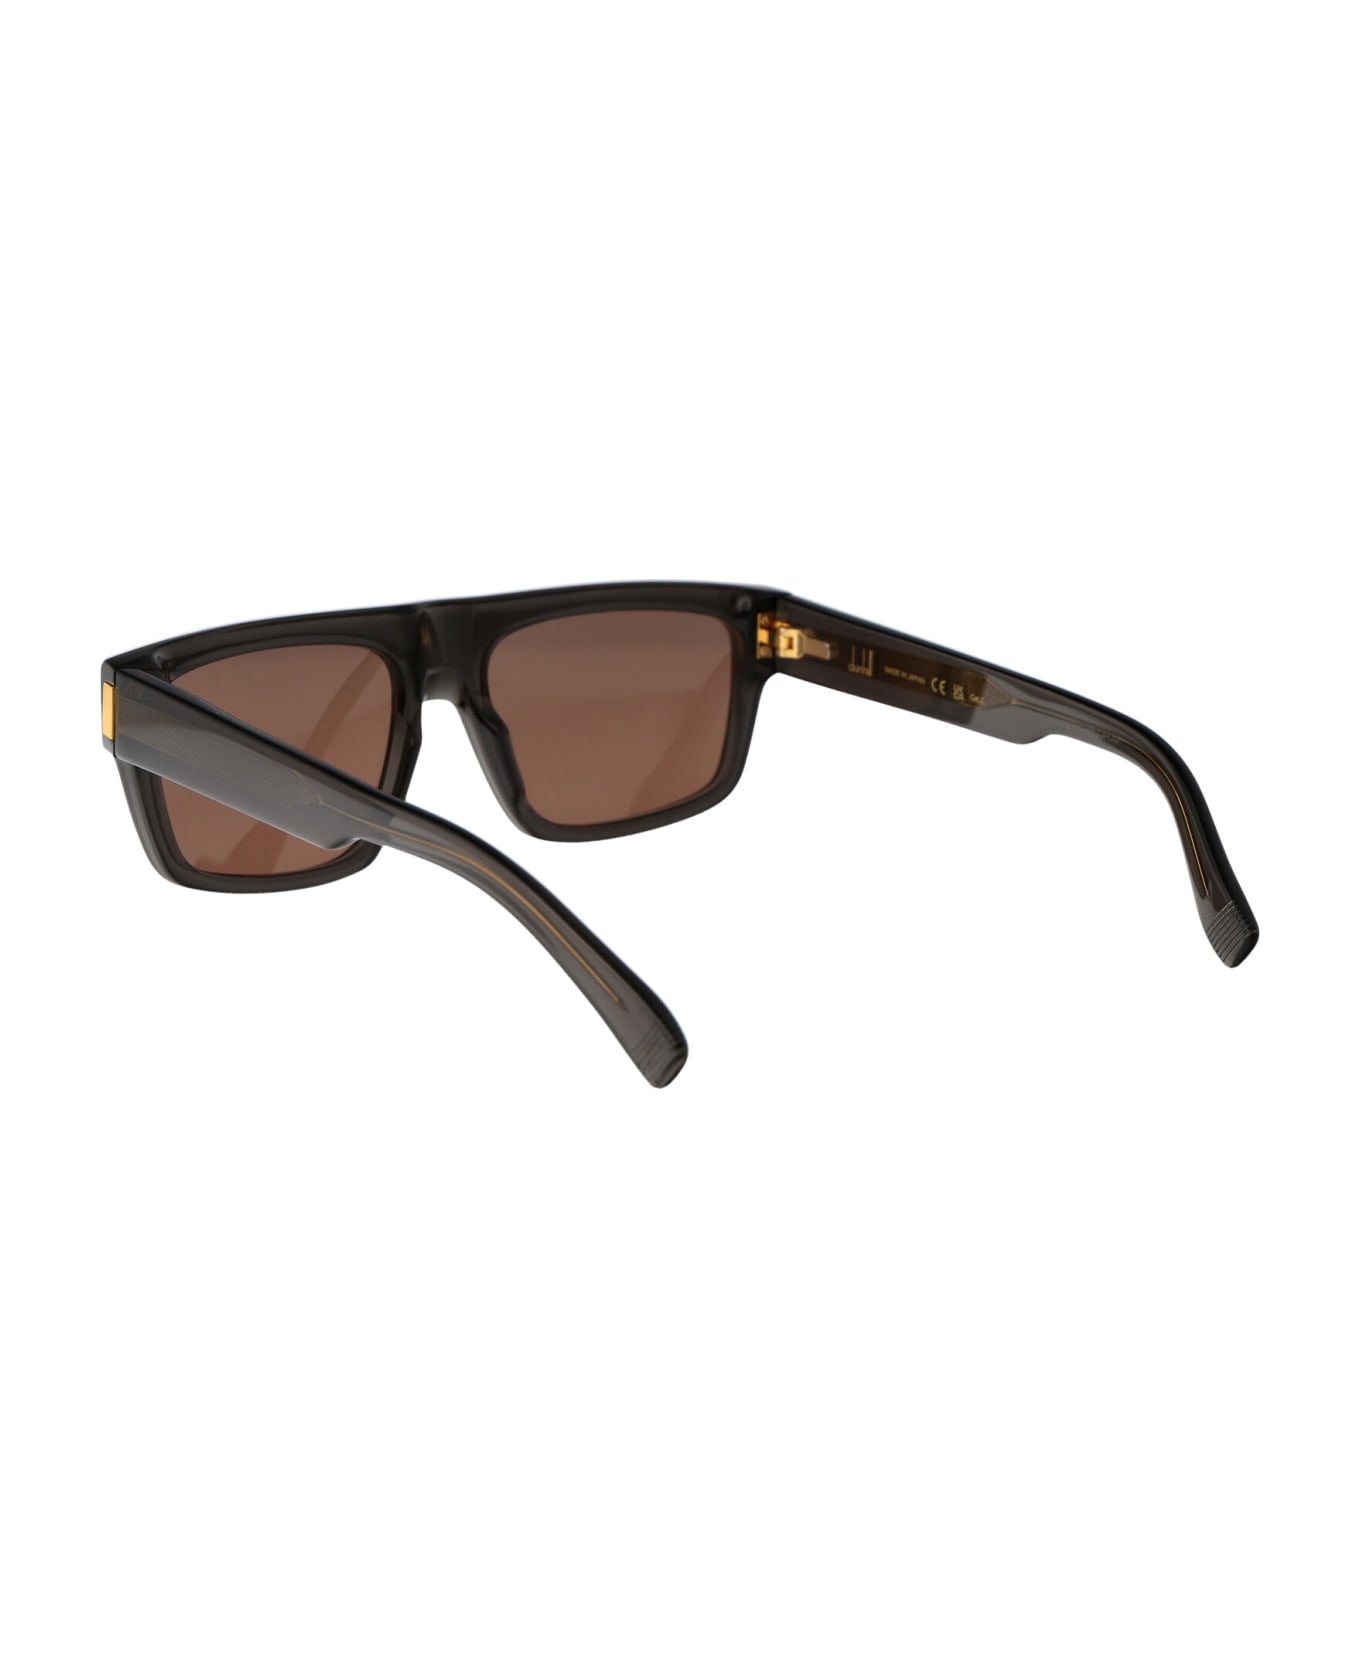 Dunhill Du0055s Sunglasses - 004 GREY GREY BROWN サングラス